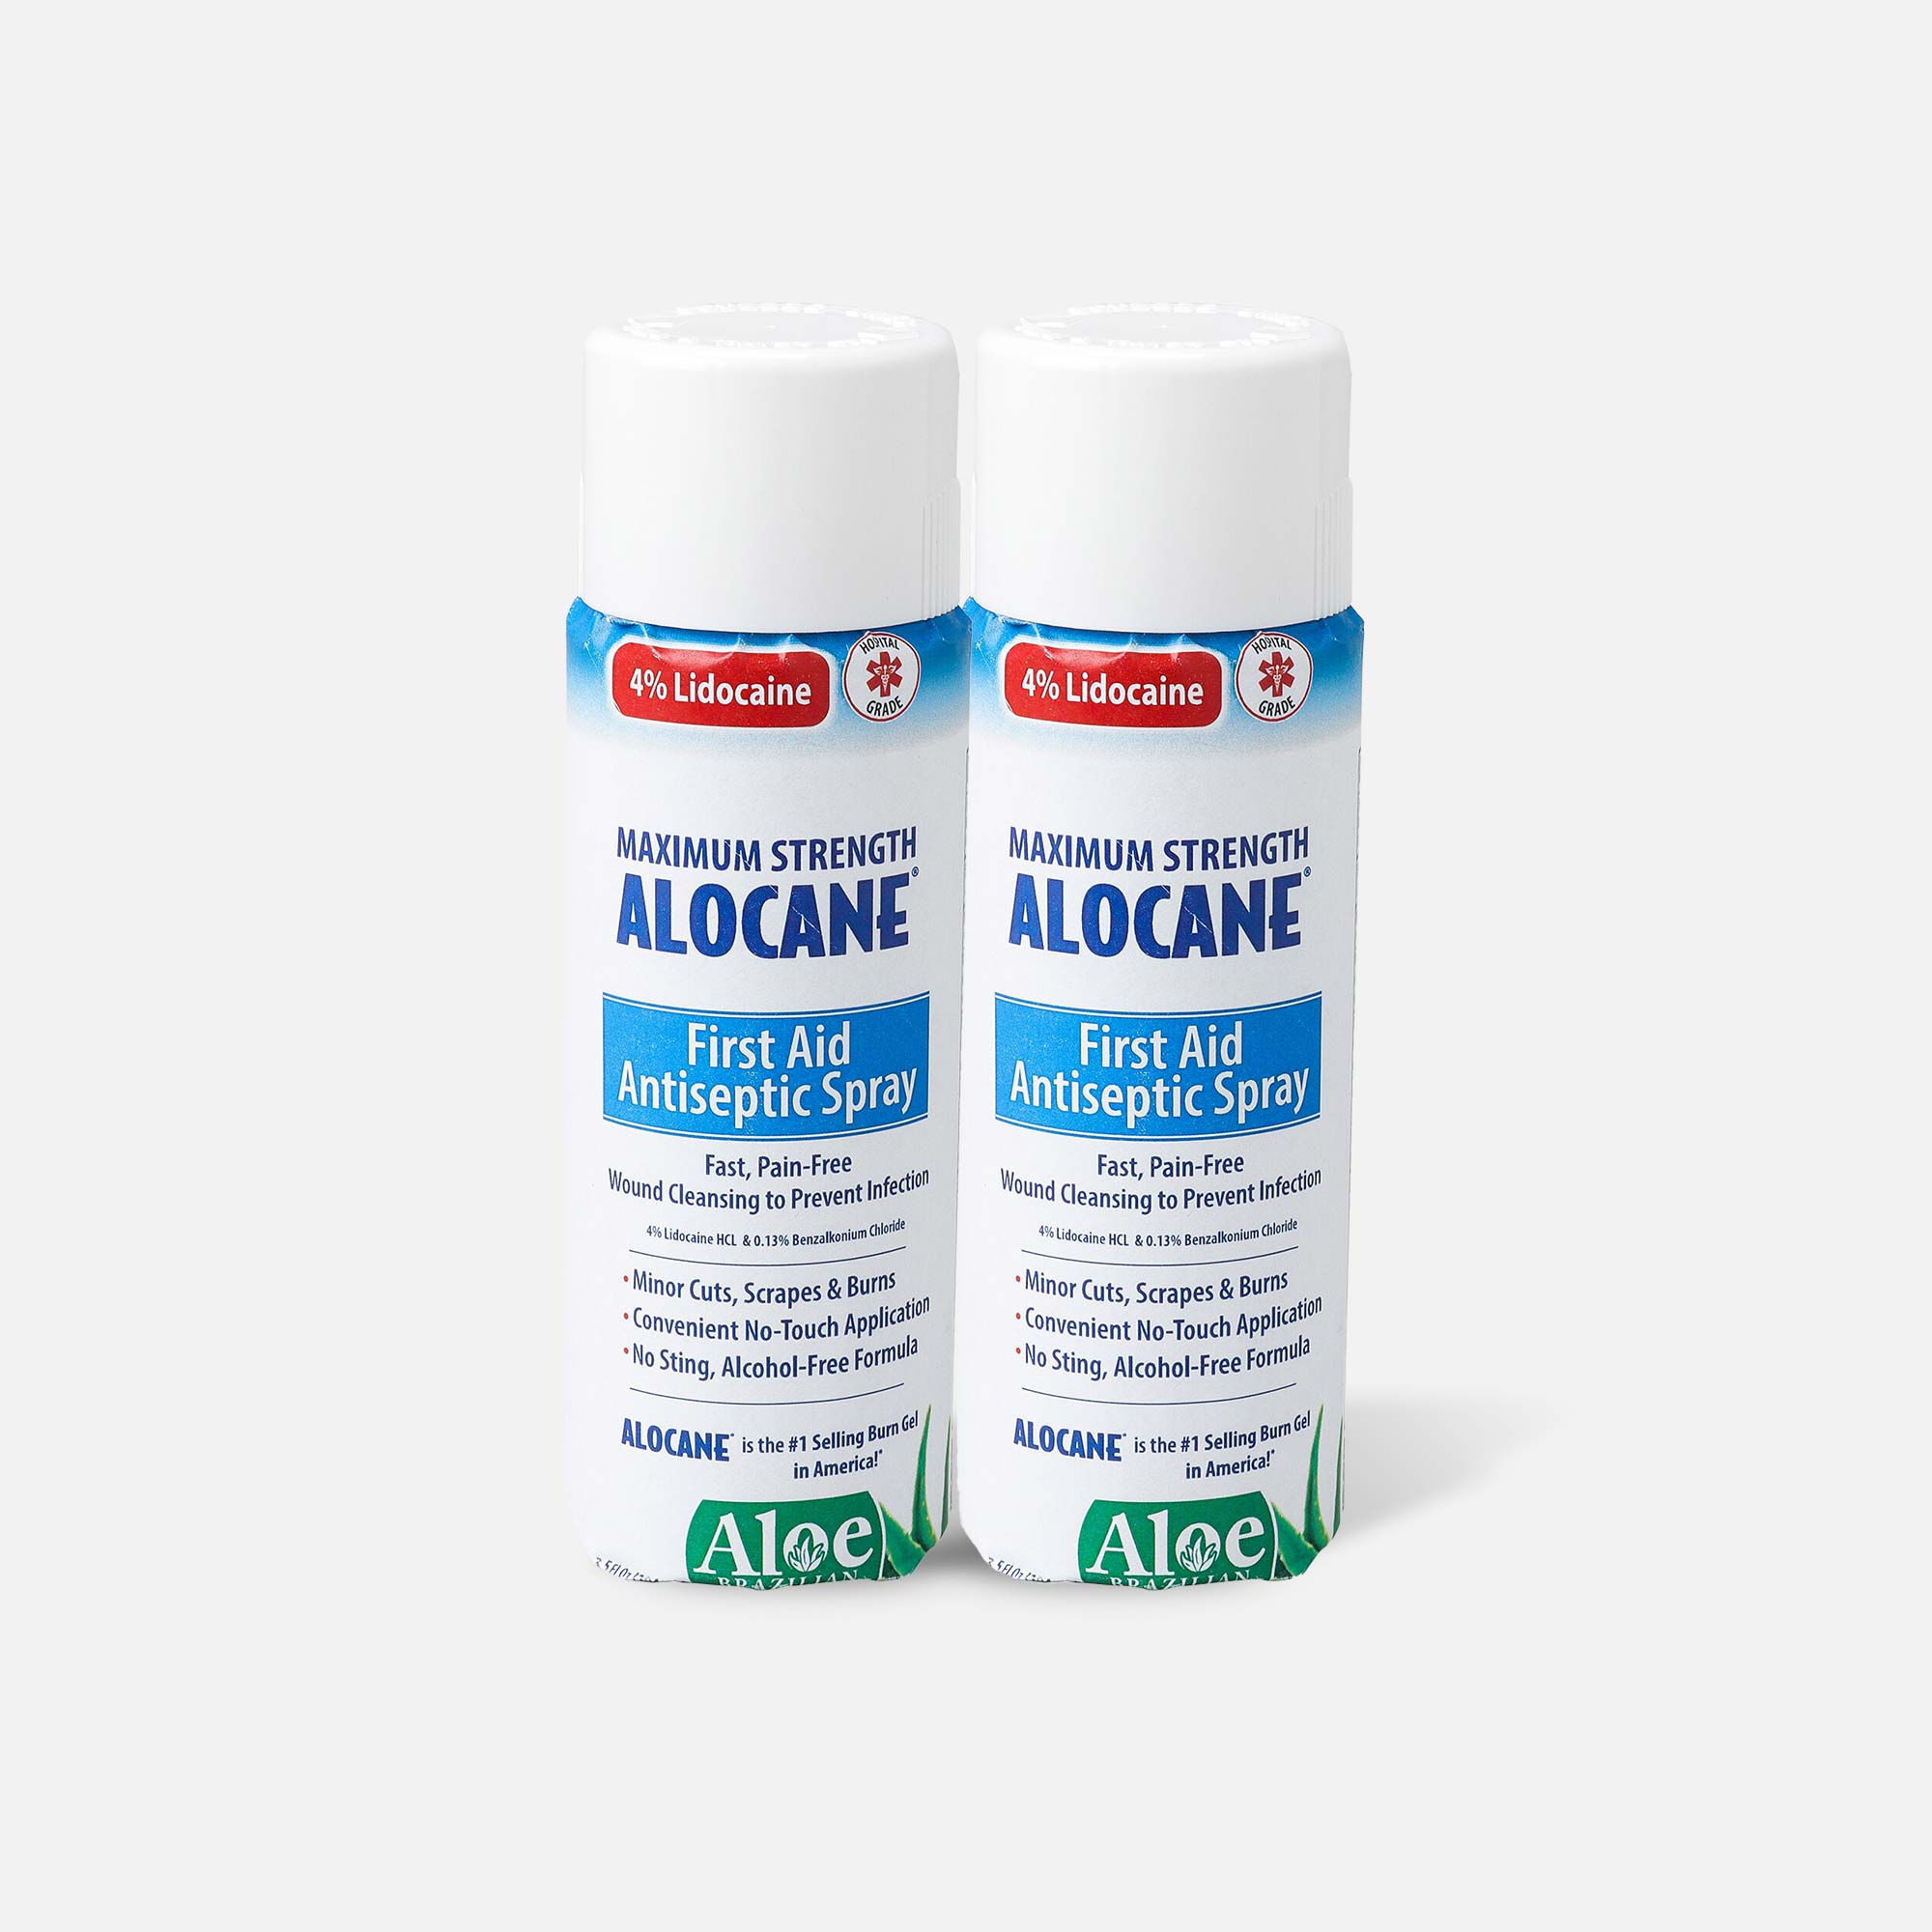 Alocane Emergency Burn Spray